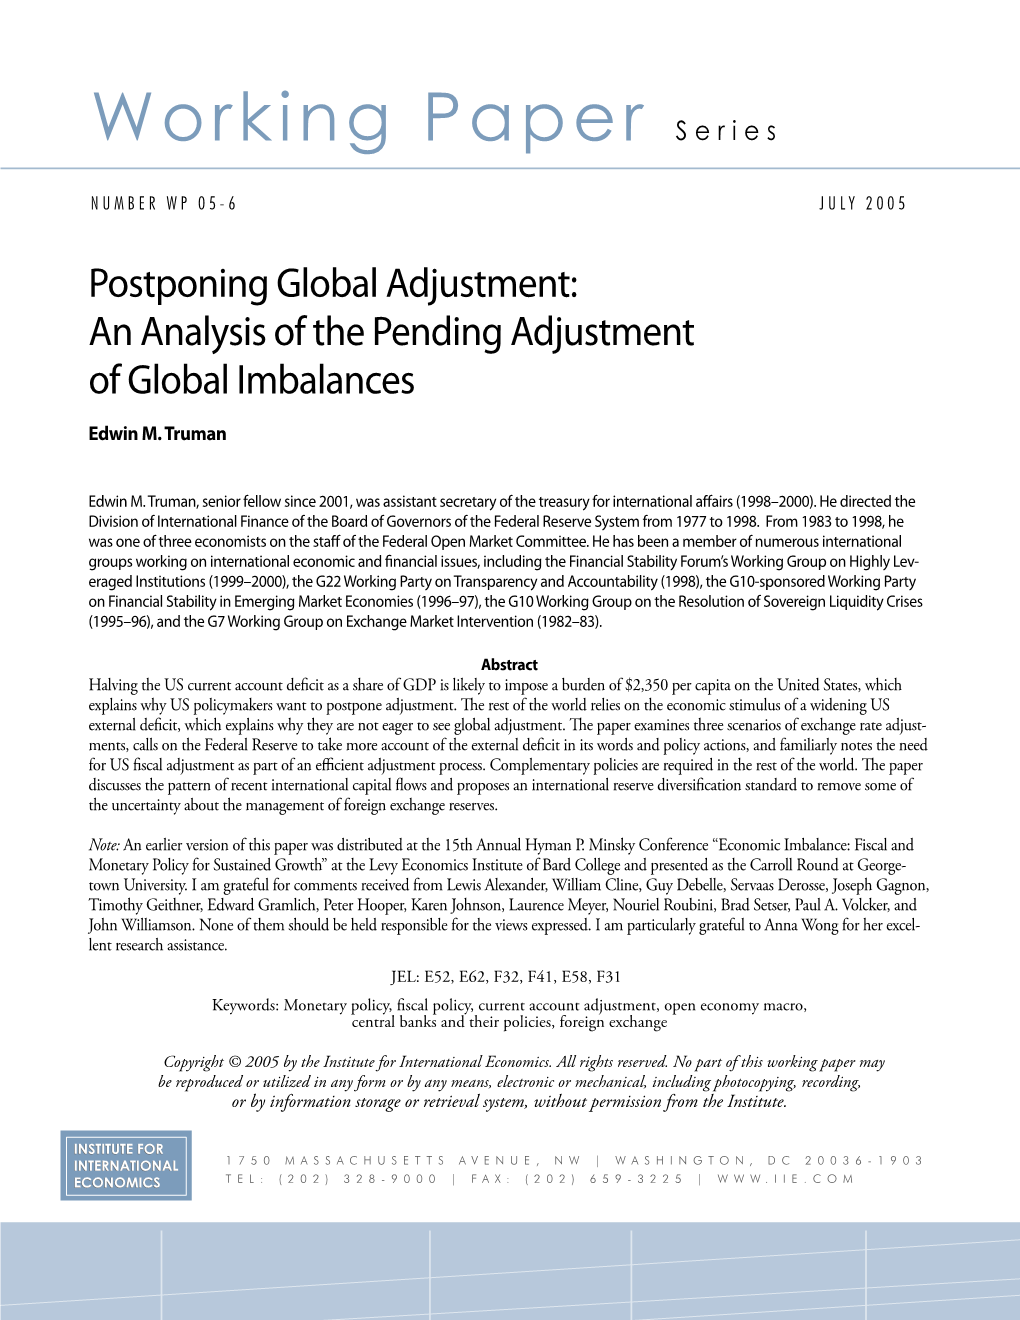 Postponing Global Adjustment: an Analysis of the Pending Adjustment of Global Imbalances